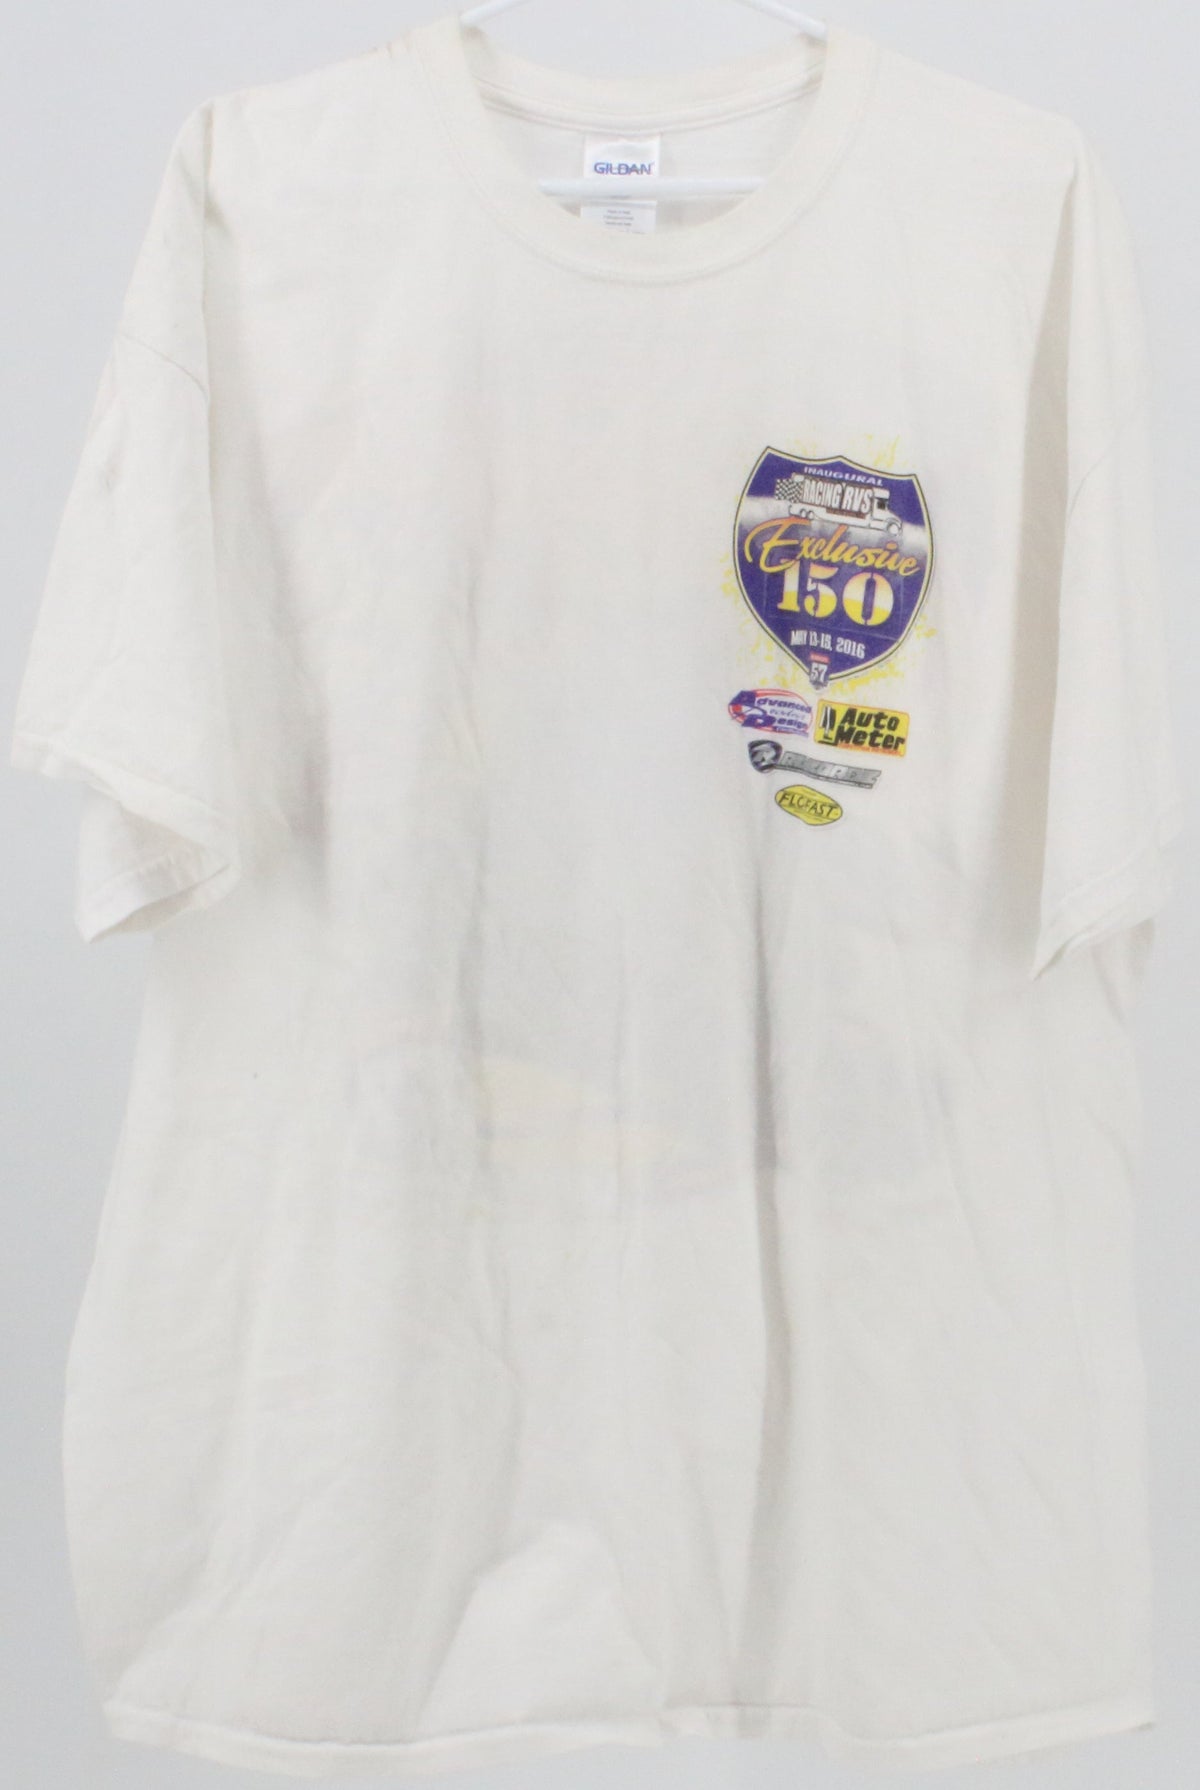 Gildan Racing RVS Exclusive 150 White T-Shirt